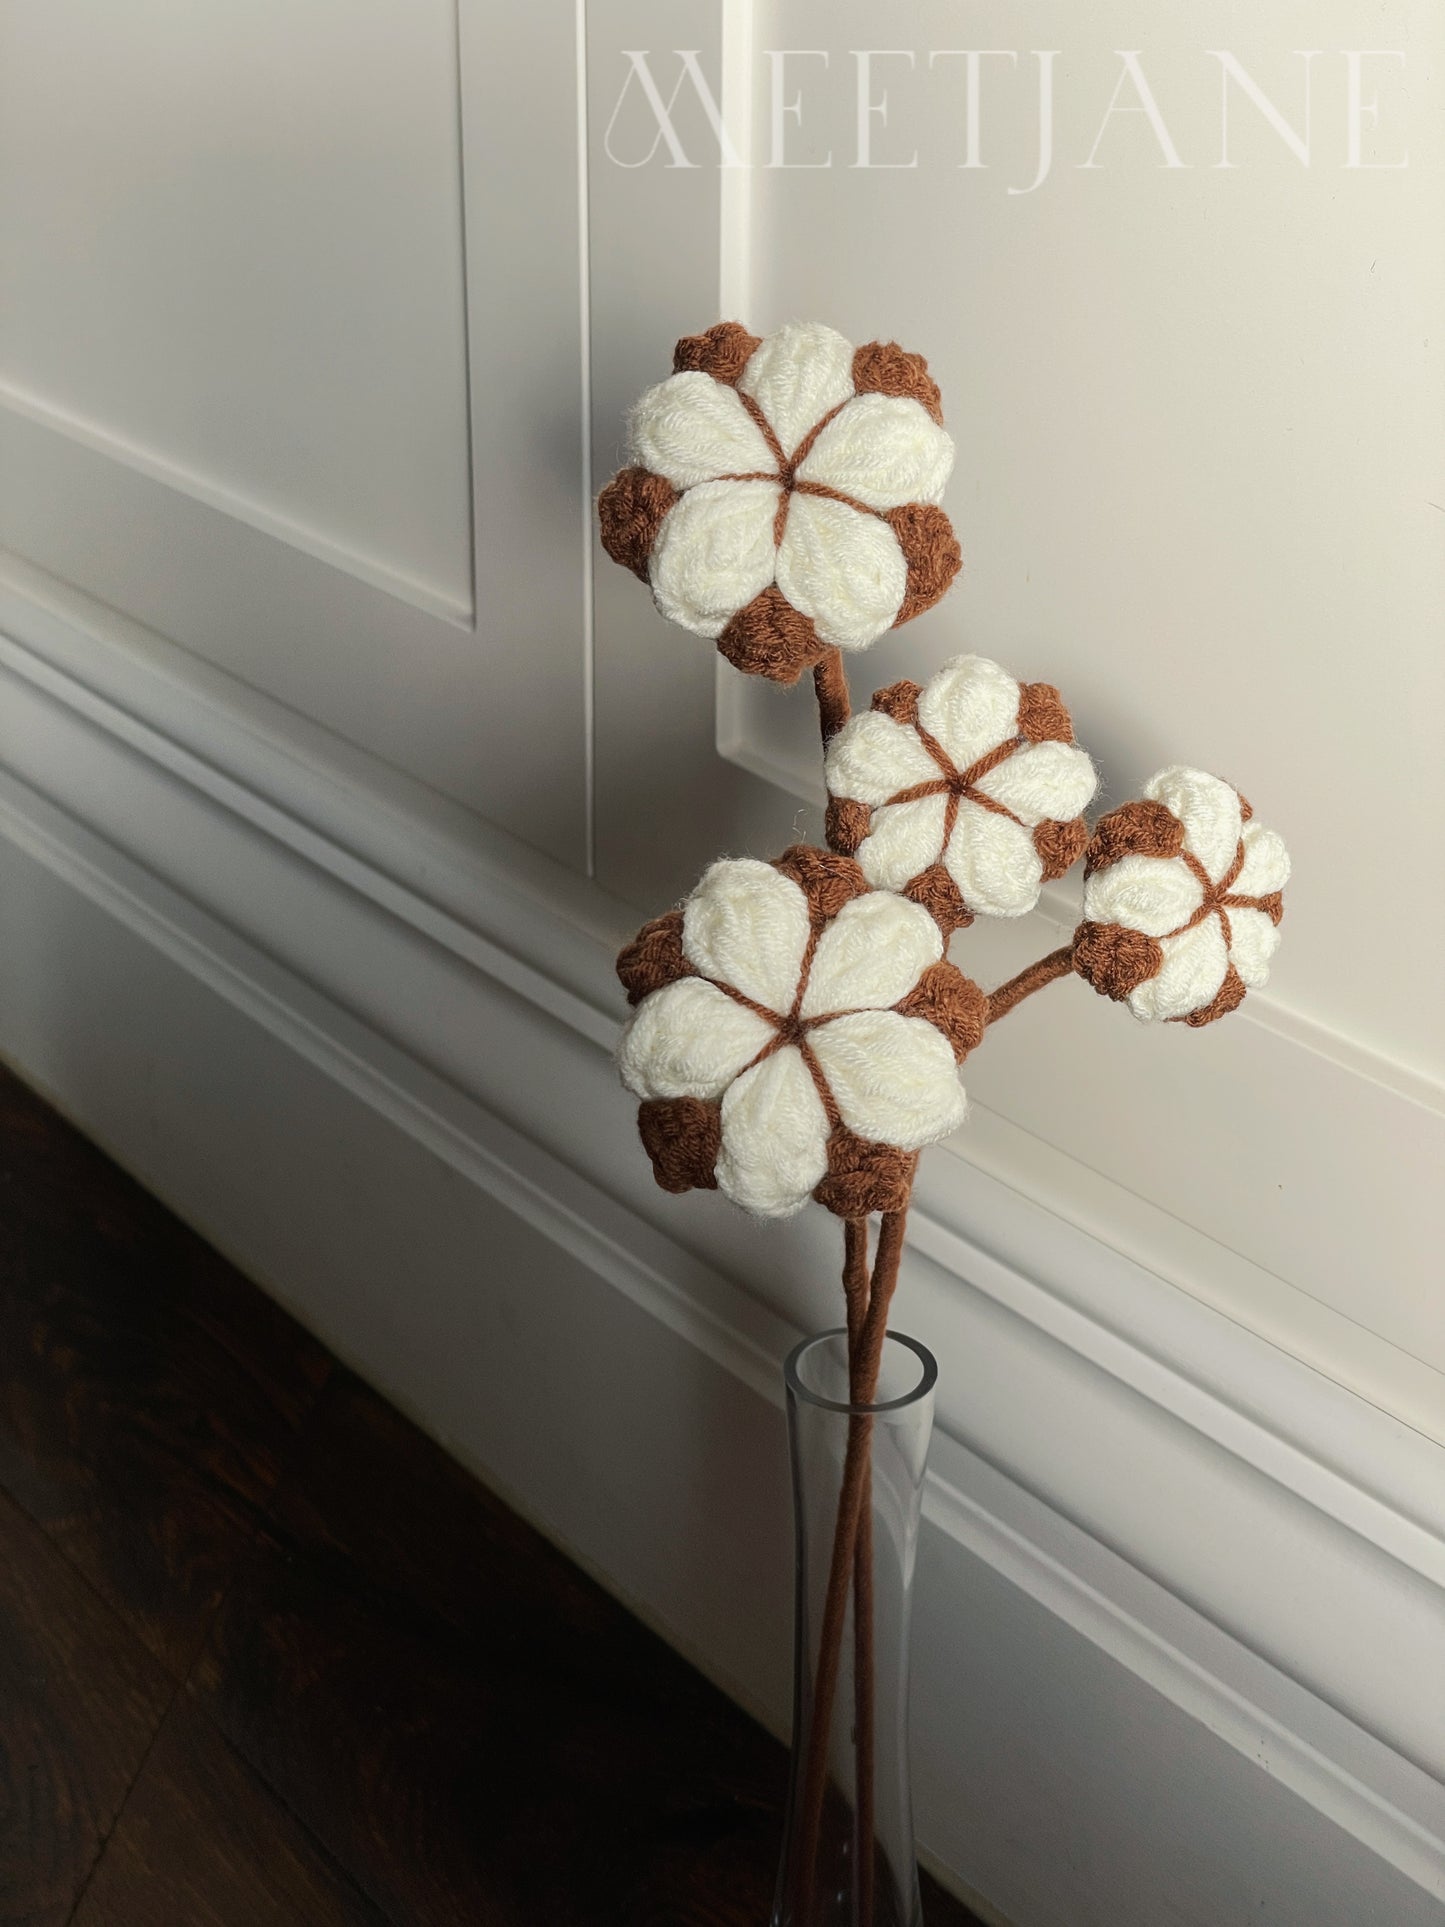 Meetjane bouquet| Melbourne handmade |Cotton